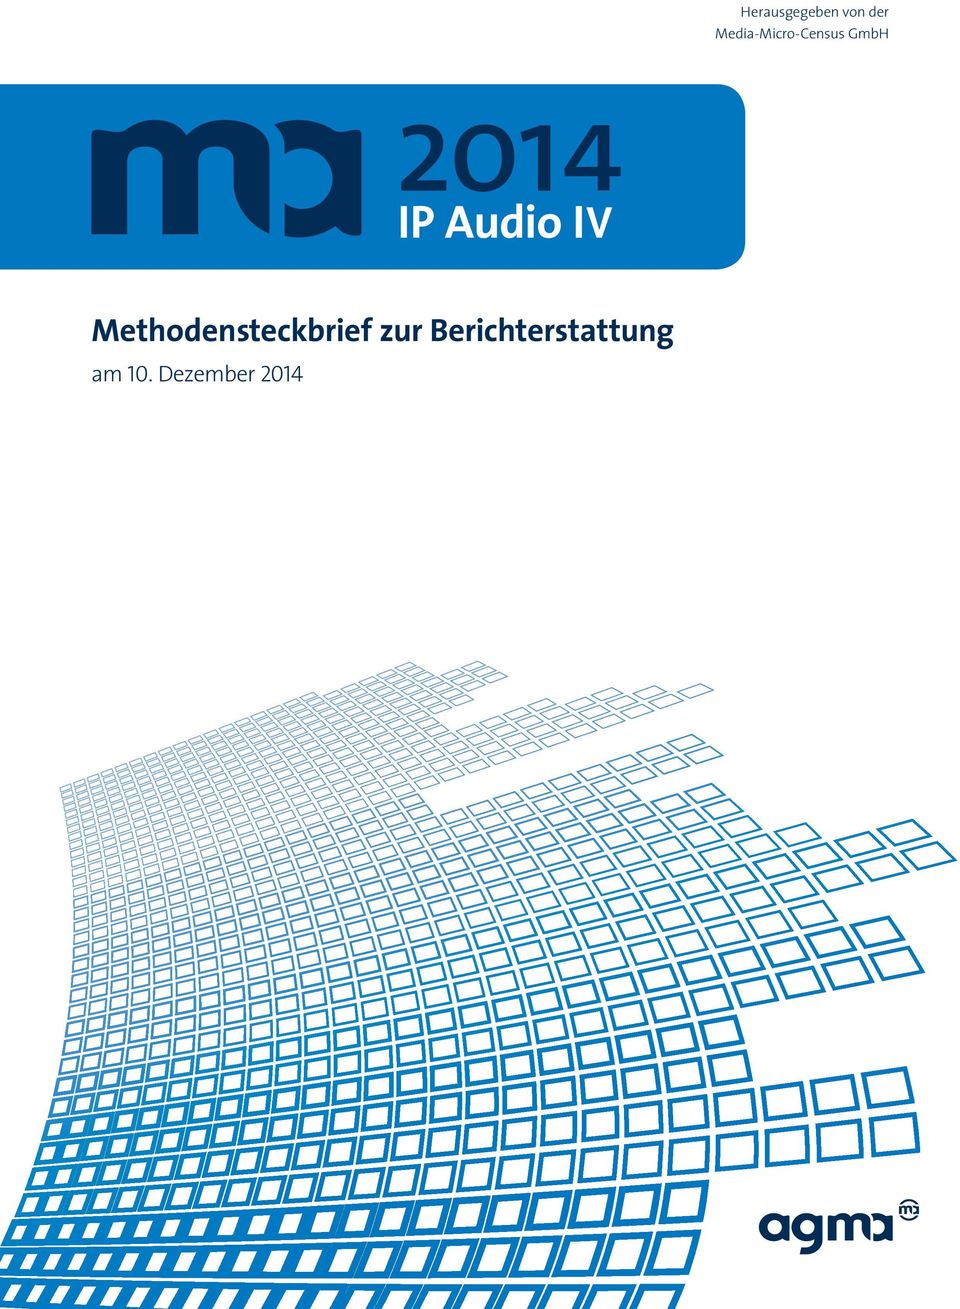 IP Audio IV Methodensteckbrief